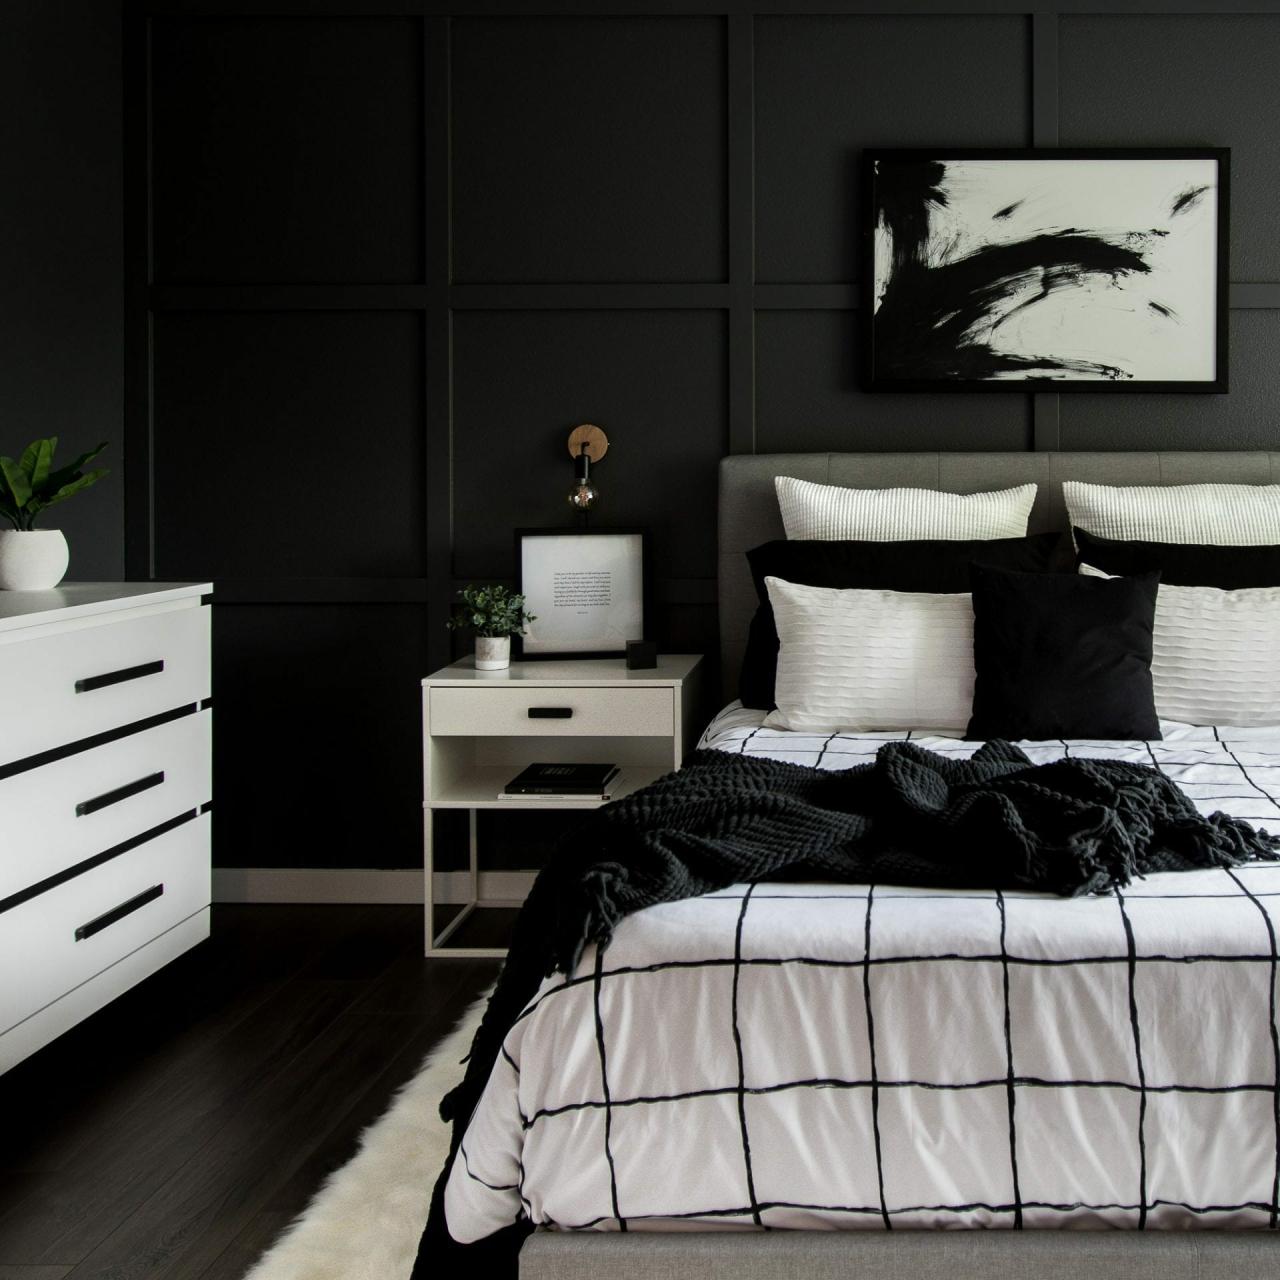 Sophisticated Monochrome Bedroom Design Ideas